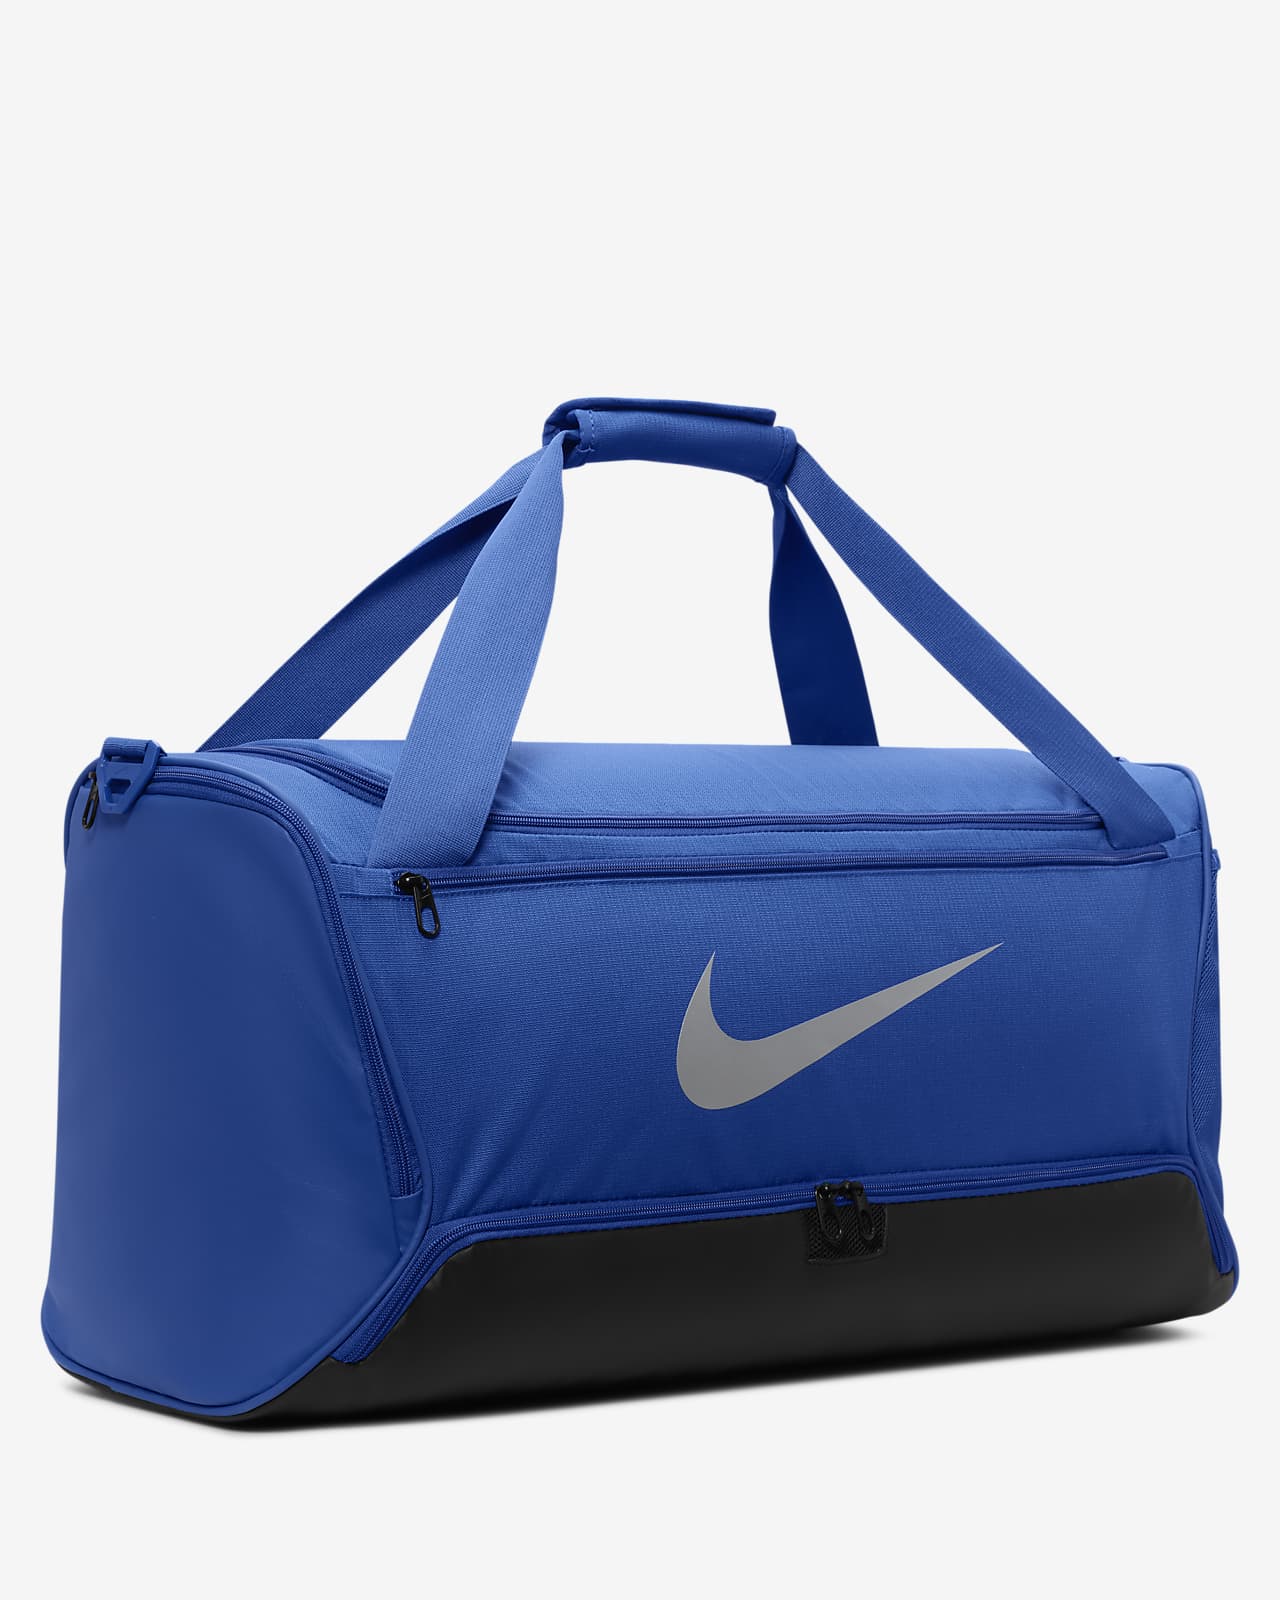 Nike Brasilia Small Training Duffel Bag